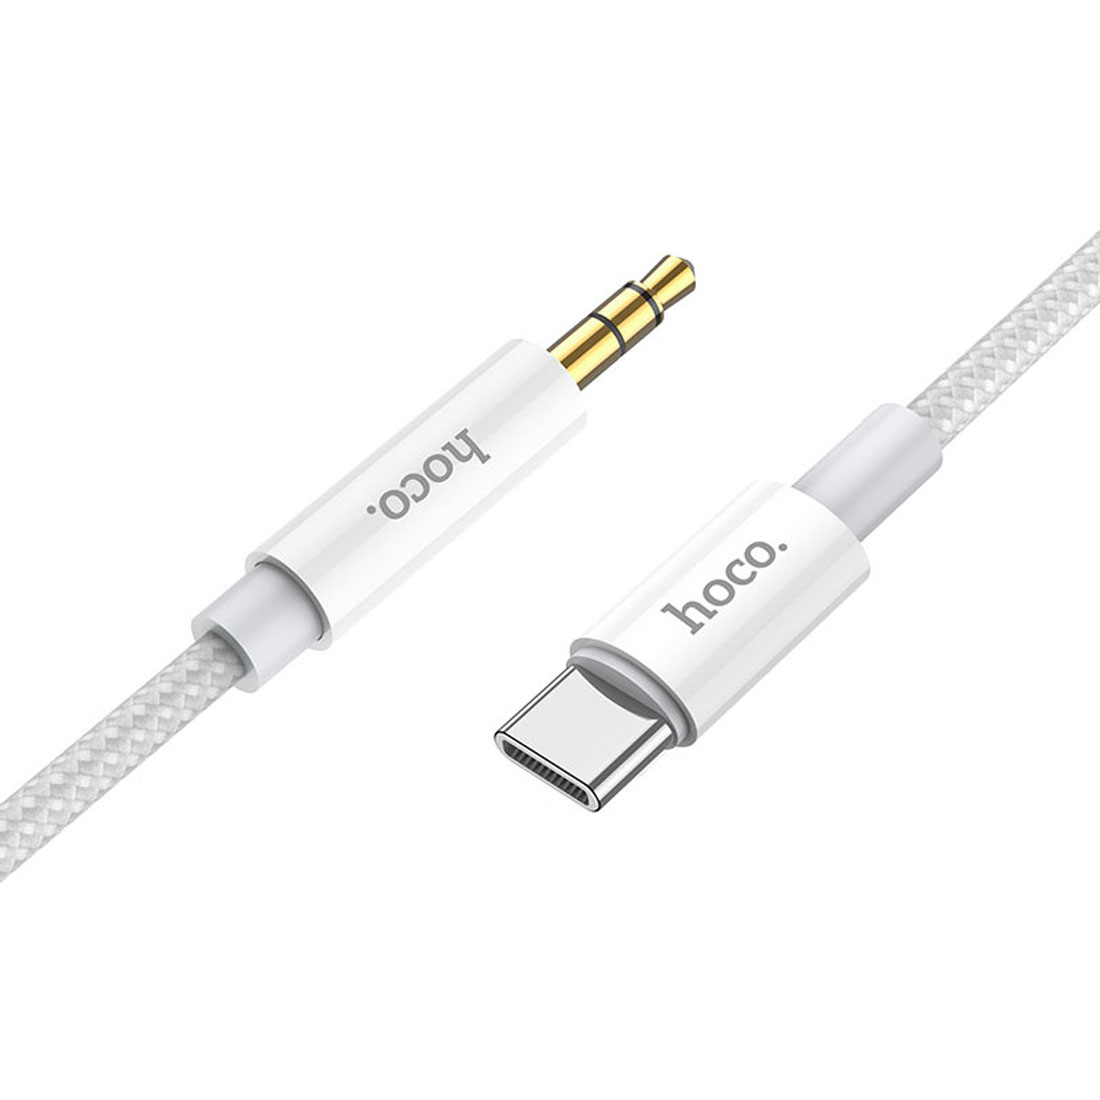 Аудио кабель, переходник HOCO UPA19 USB Type C (папа) на AUX Jack 3.5 mm (папа), длина 1 метр, цвет серый